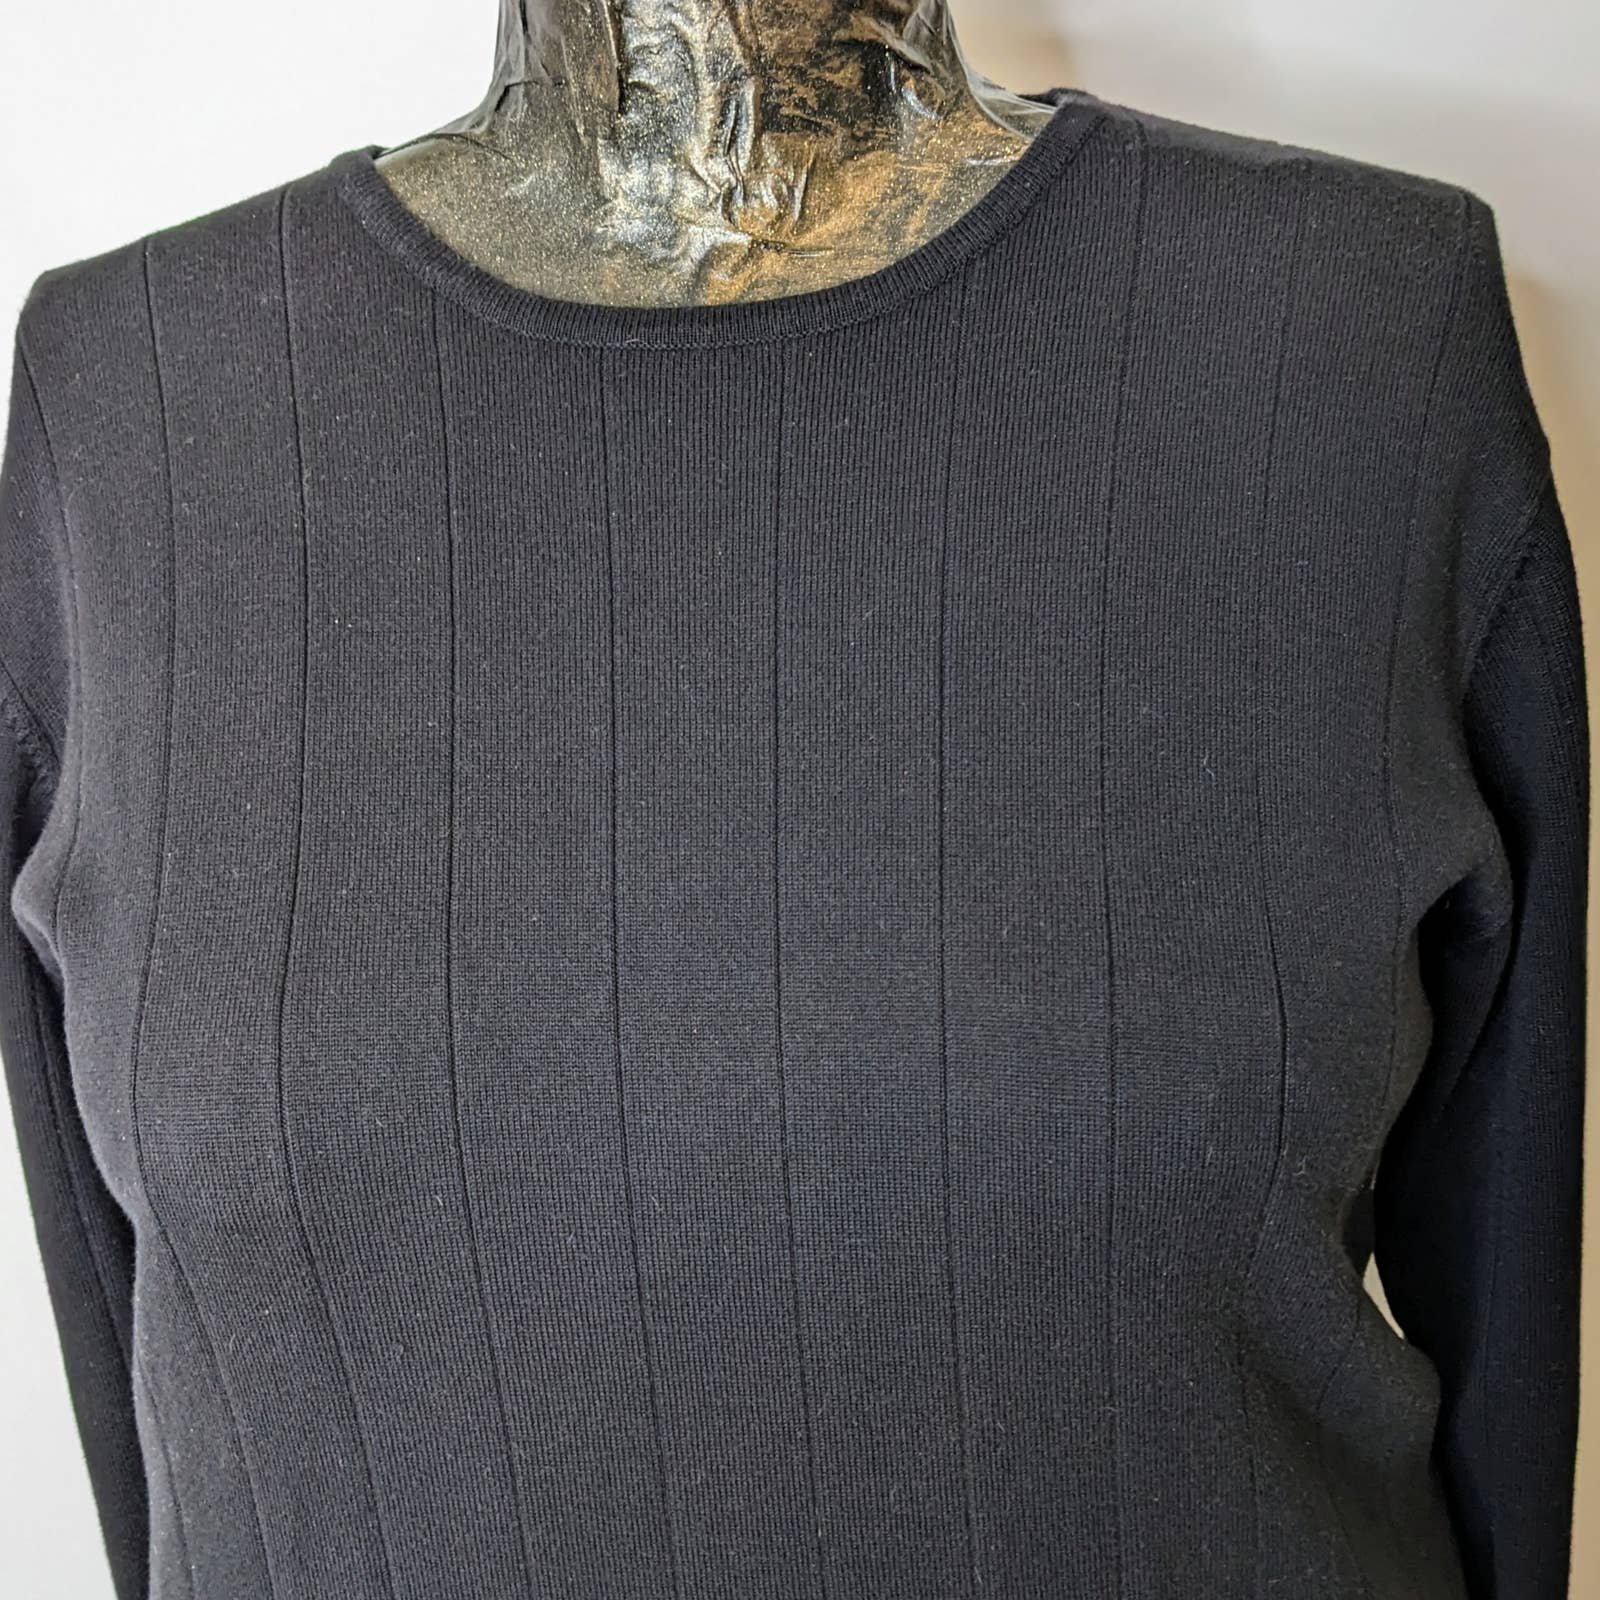 Dress Barn Black Ribbed Cotton Blend Lightweight Sweater 3/4 Sleeves Size 18/20 ggPN0AVV6